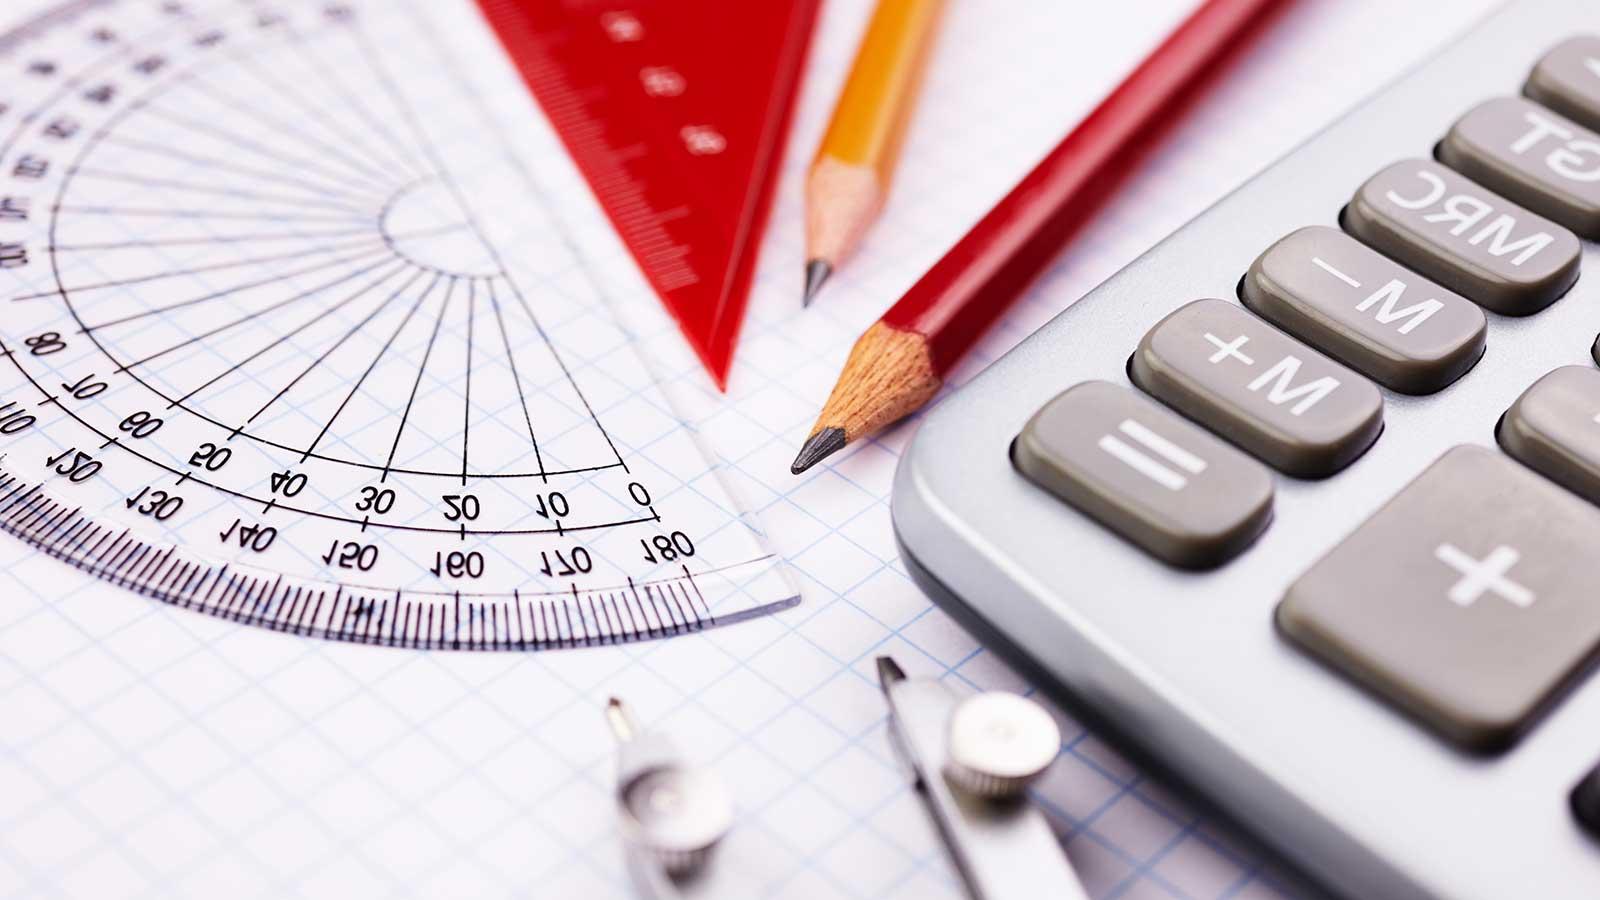 esball国际平台客户端数学系学生使用的铅笔、量角器、计算器和指南针